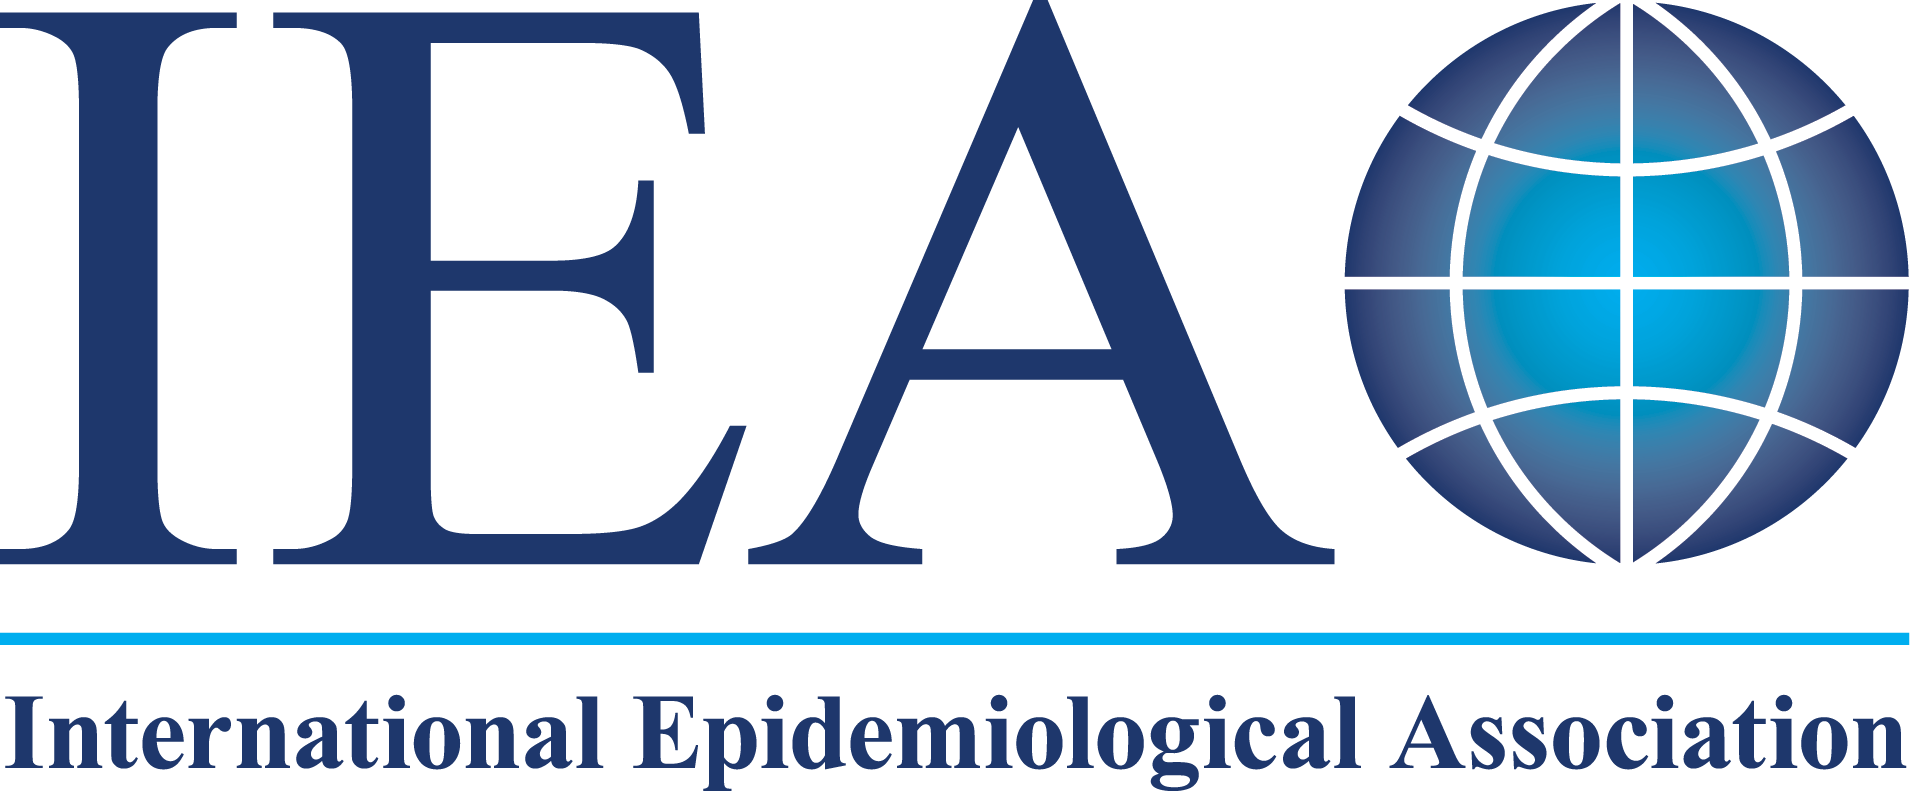 IEA-Logo-2019